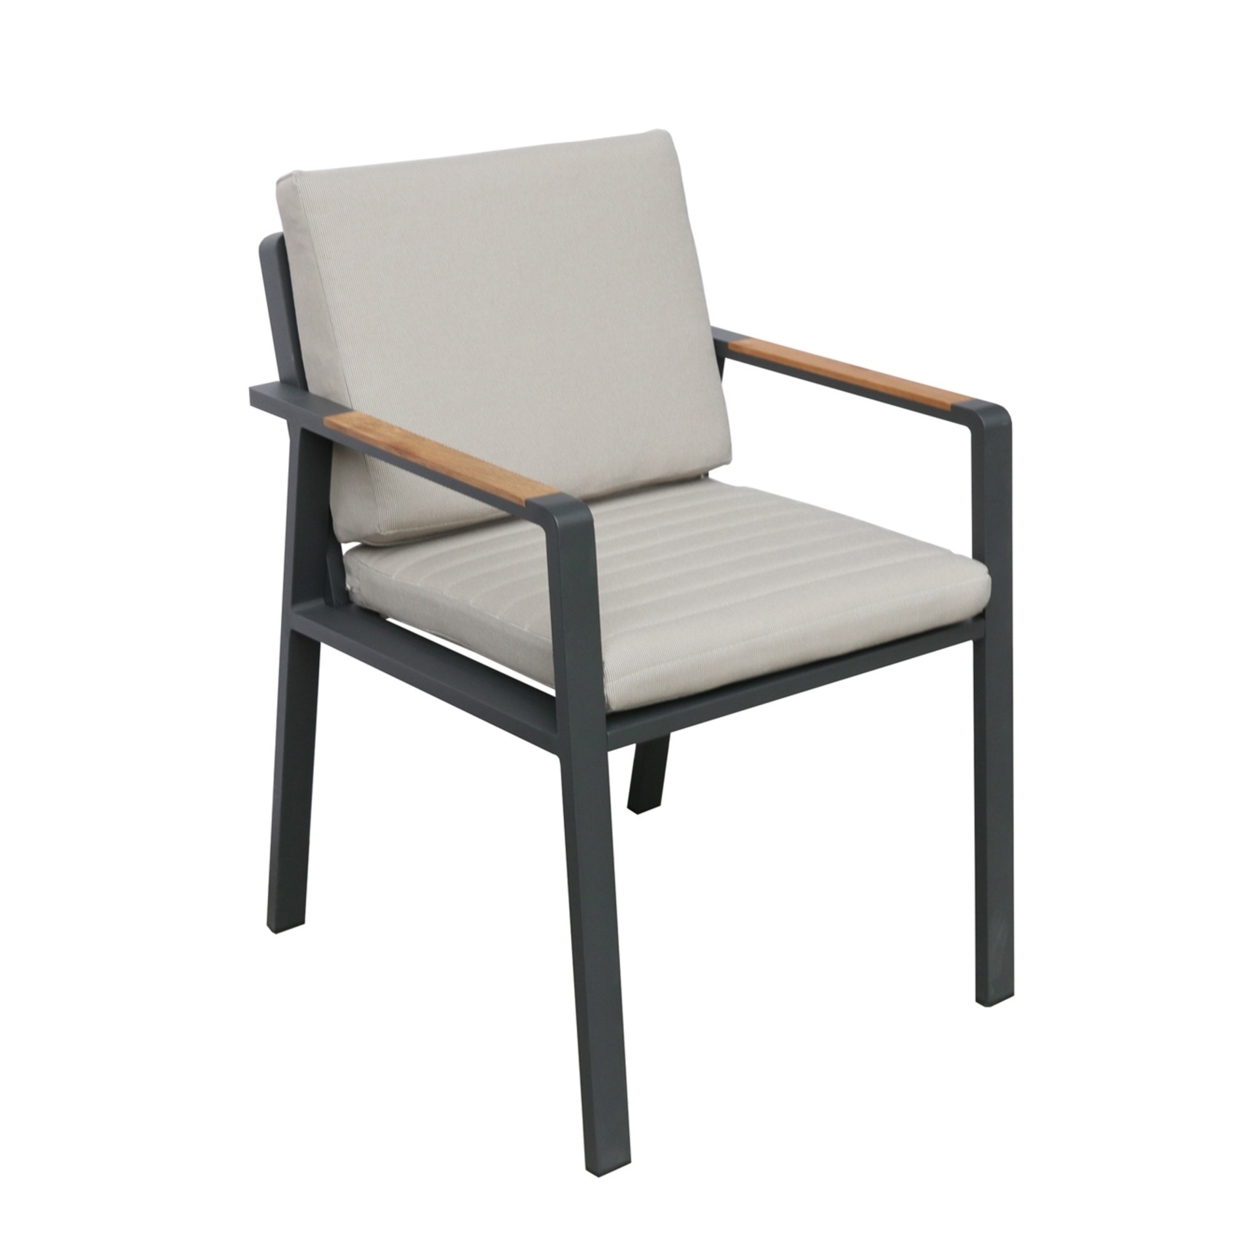 19 Inches Olefin Upholstered Aluminum Dining Chair, Set Of 2, Gray- Saltoro Sherpi